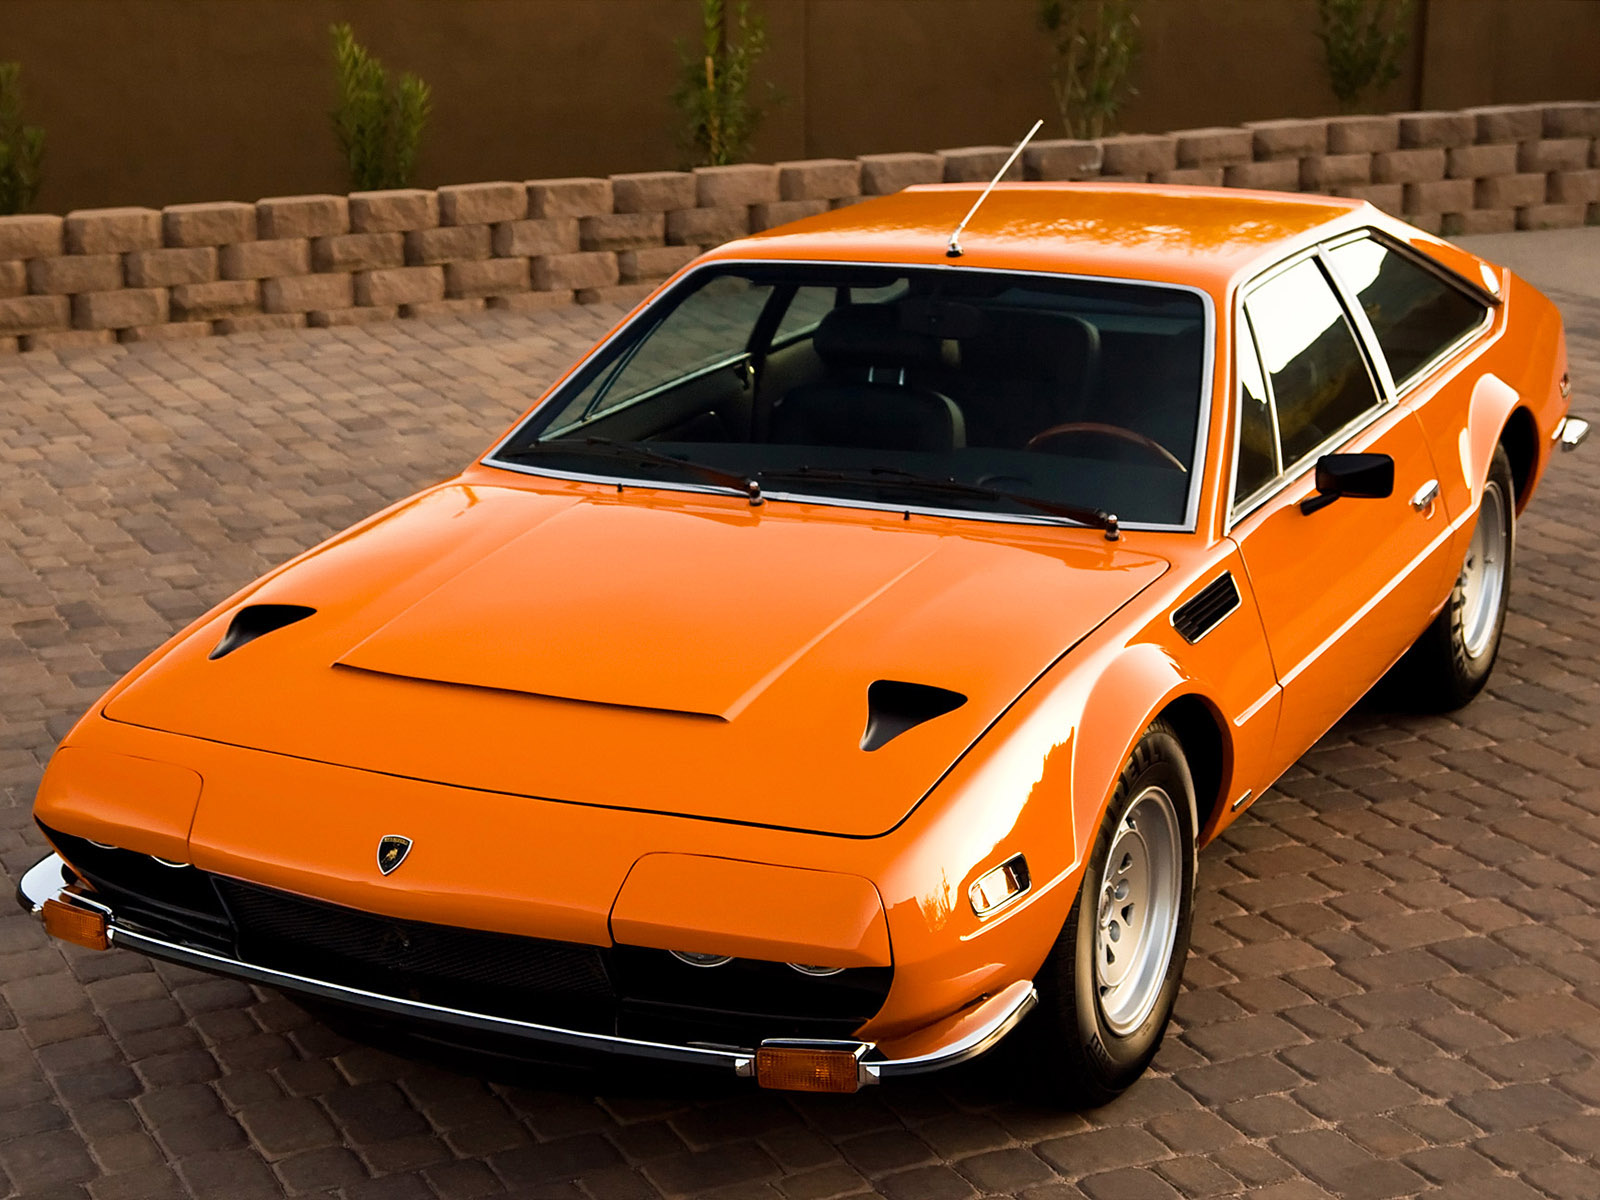 Car in pictures - car photo gallery » Lamborghini Jarama ...